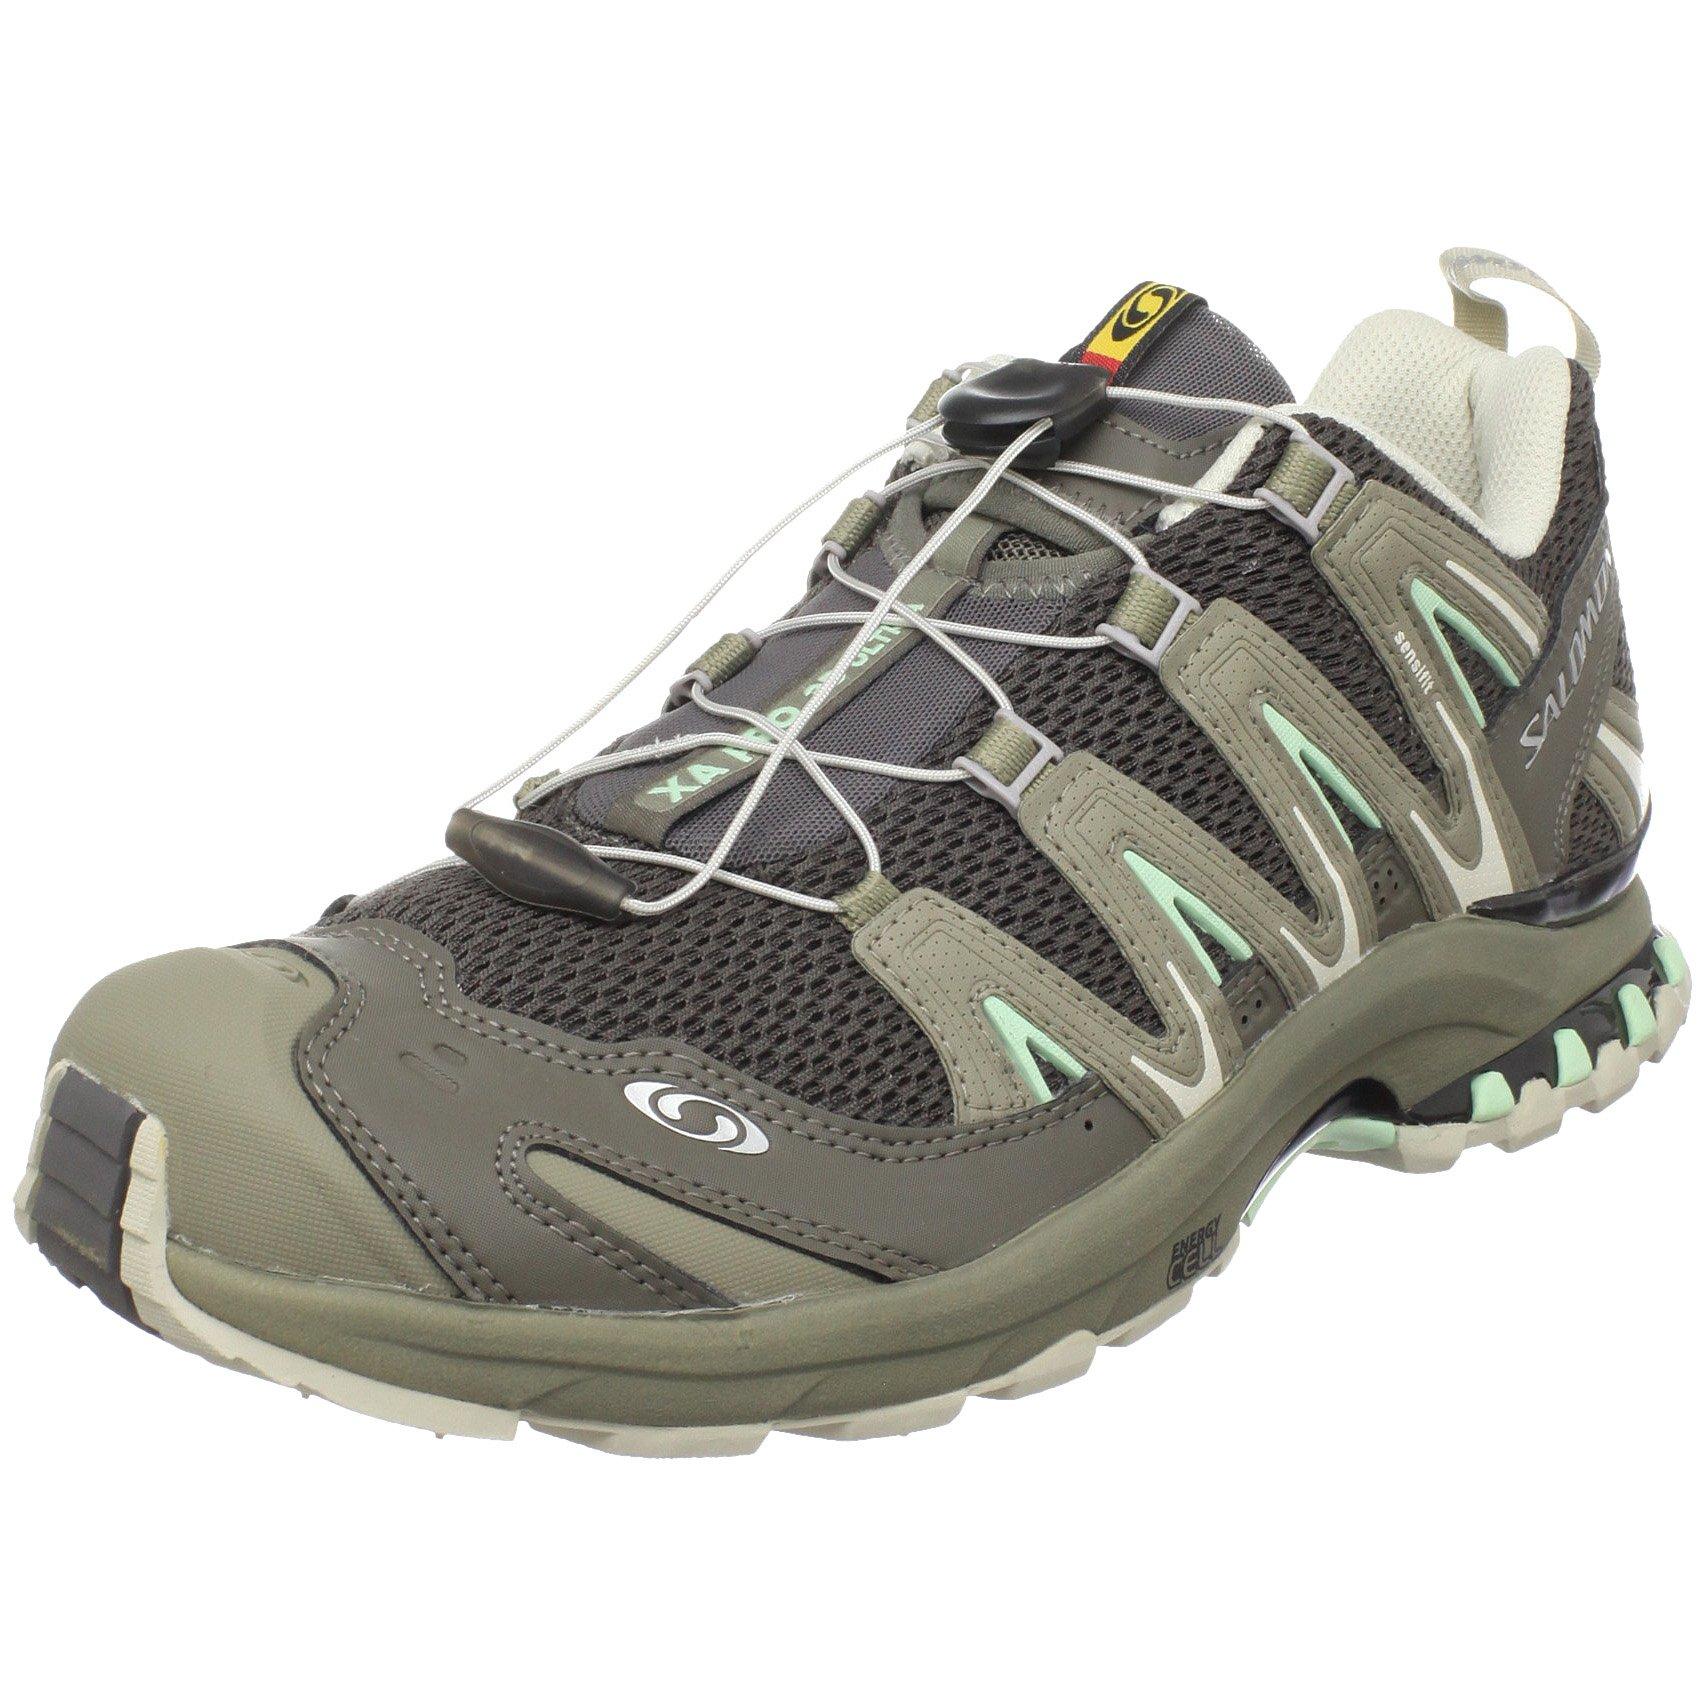 Salomon Pro 3d Ultra Trail Running Shoe,swamp/dark Clay/light Mint,9.5 M Us in Green |